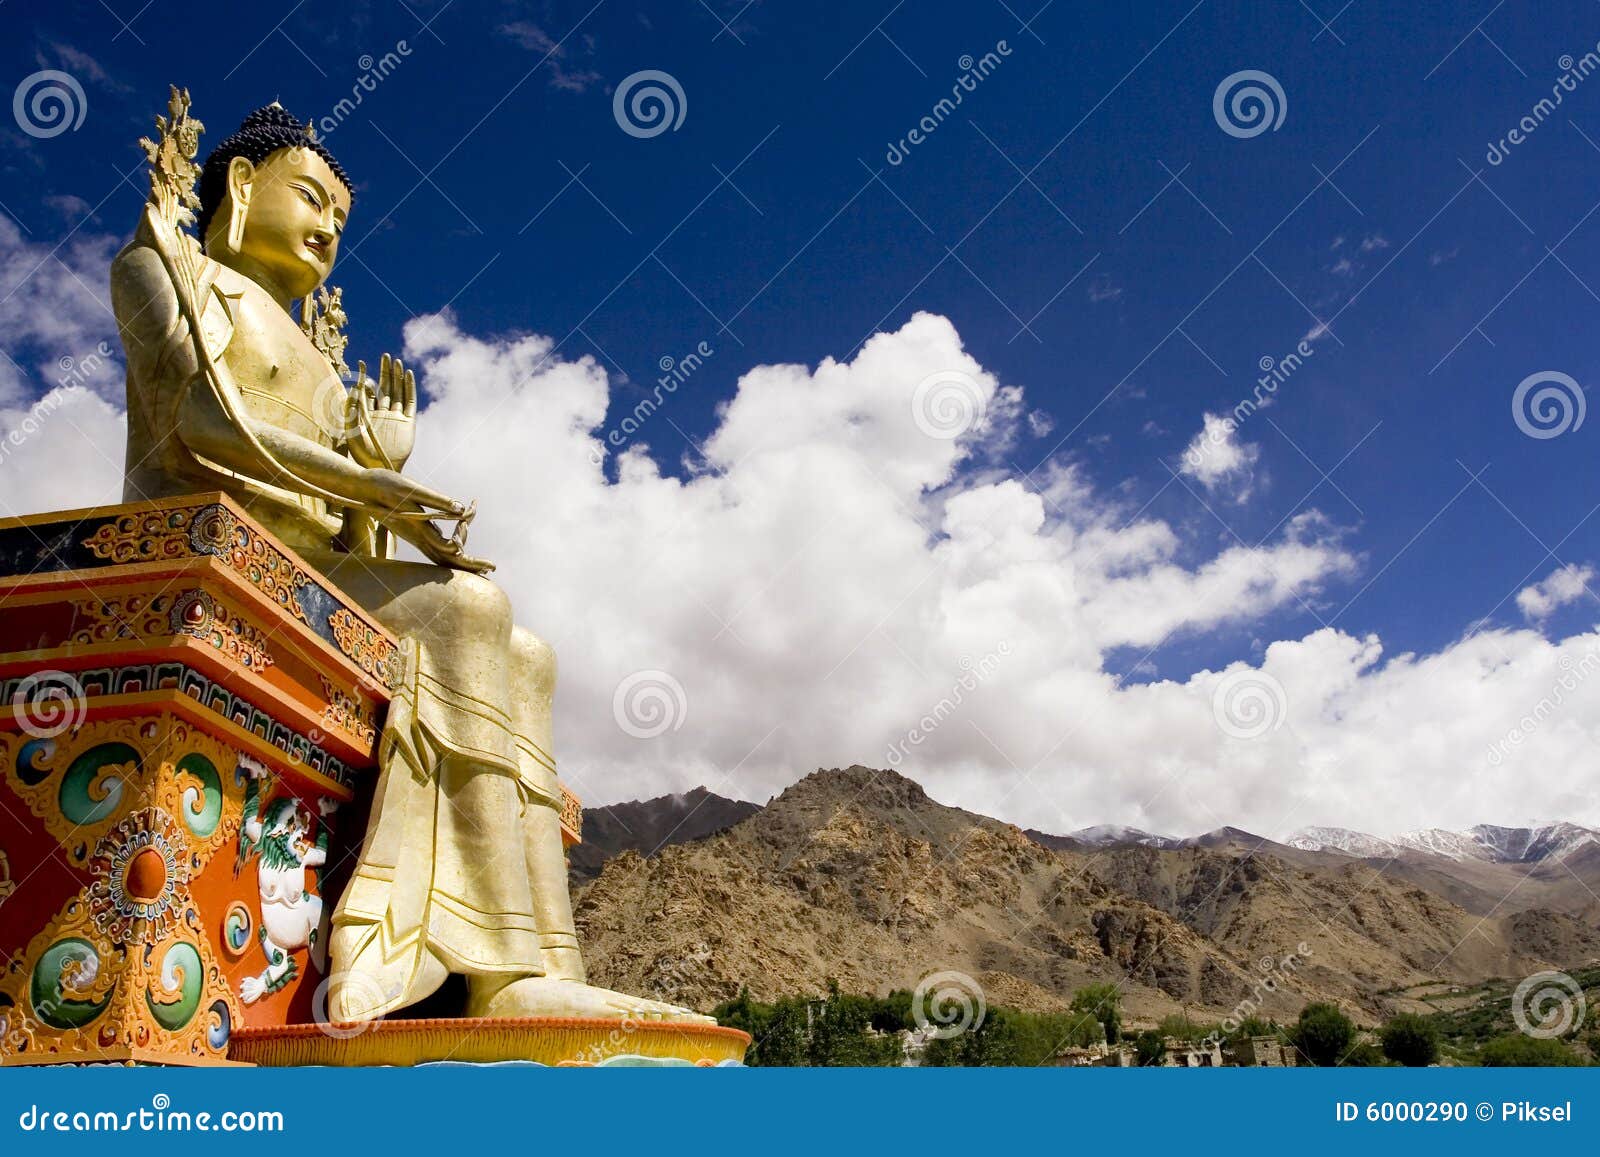 buddha statue and himalayas